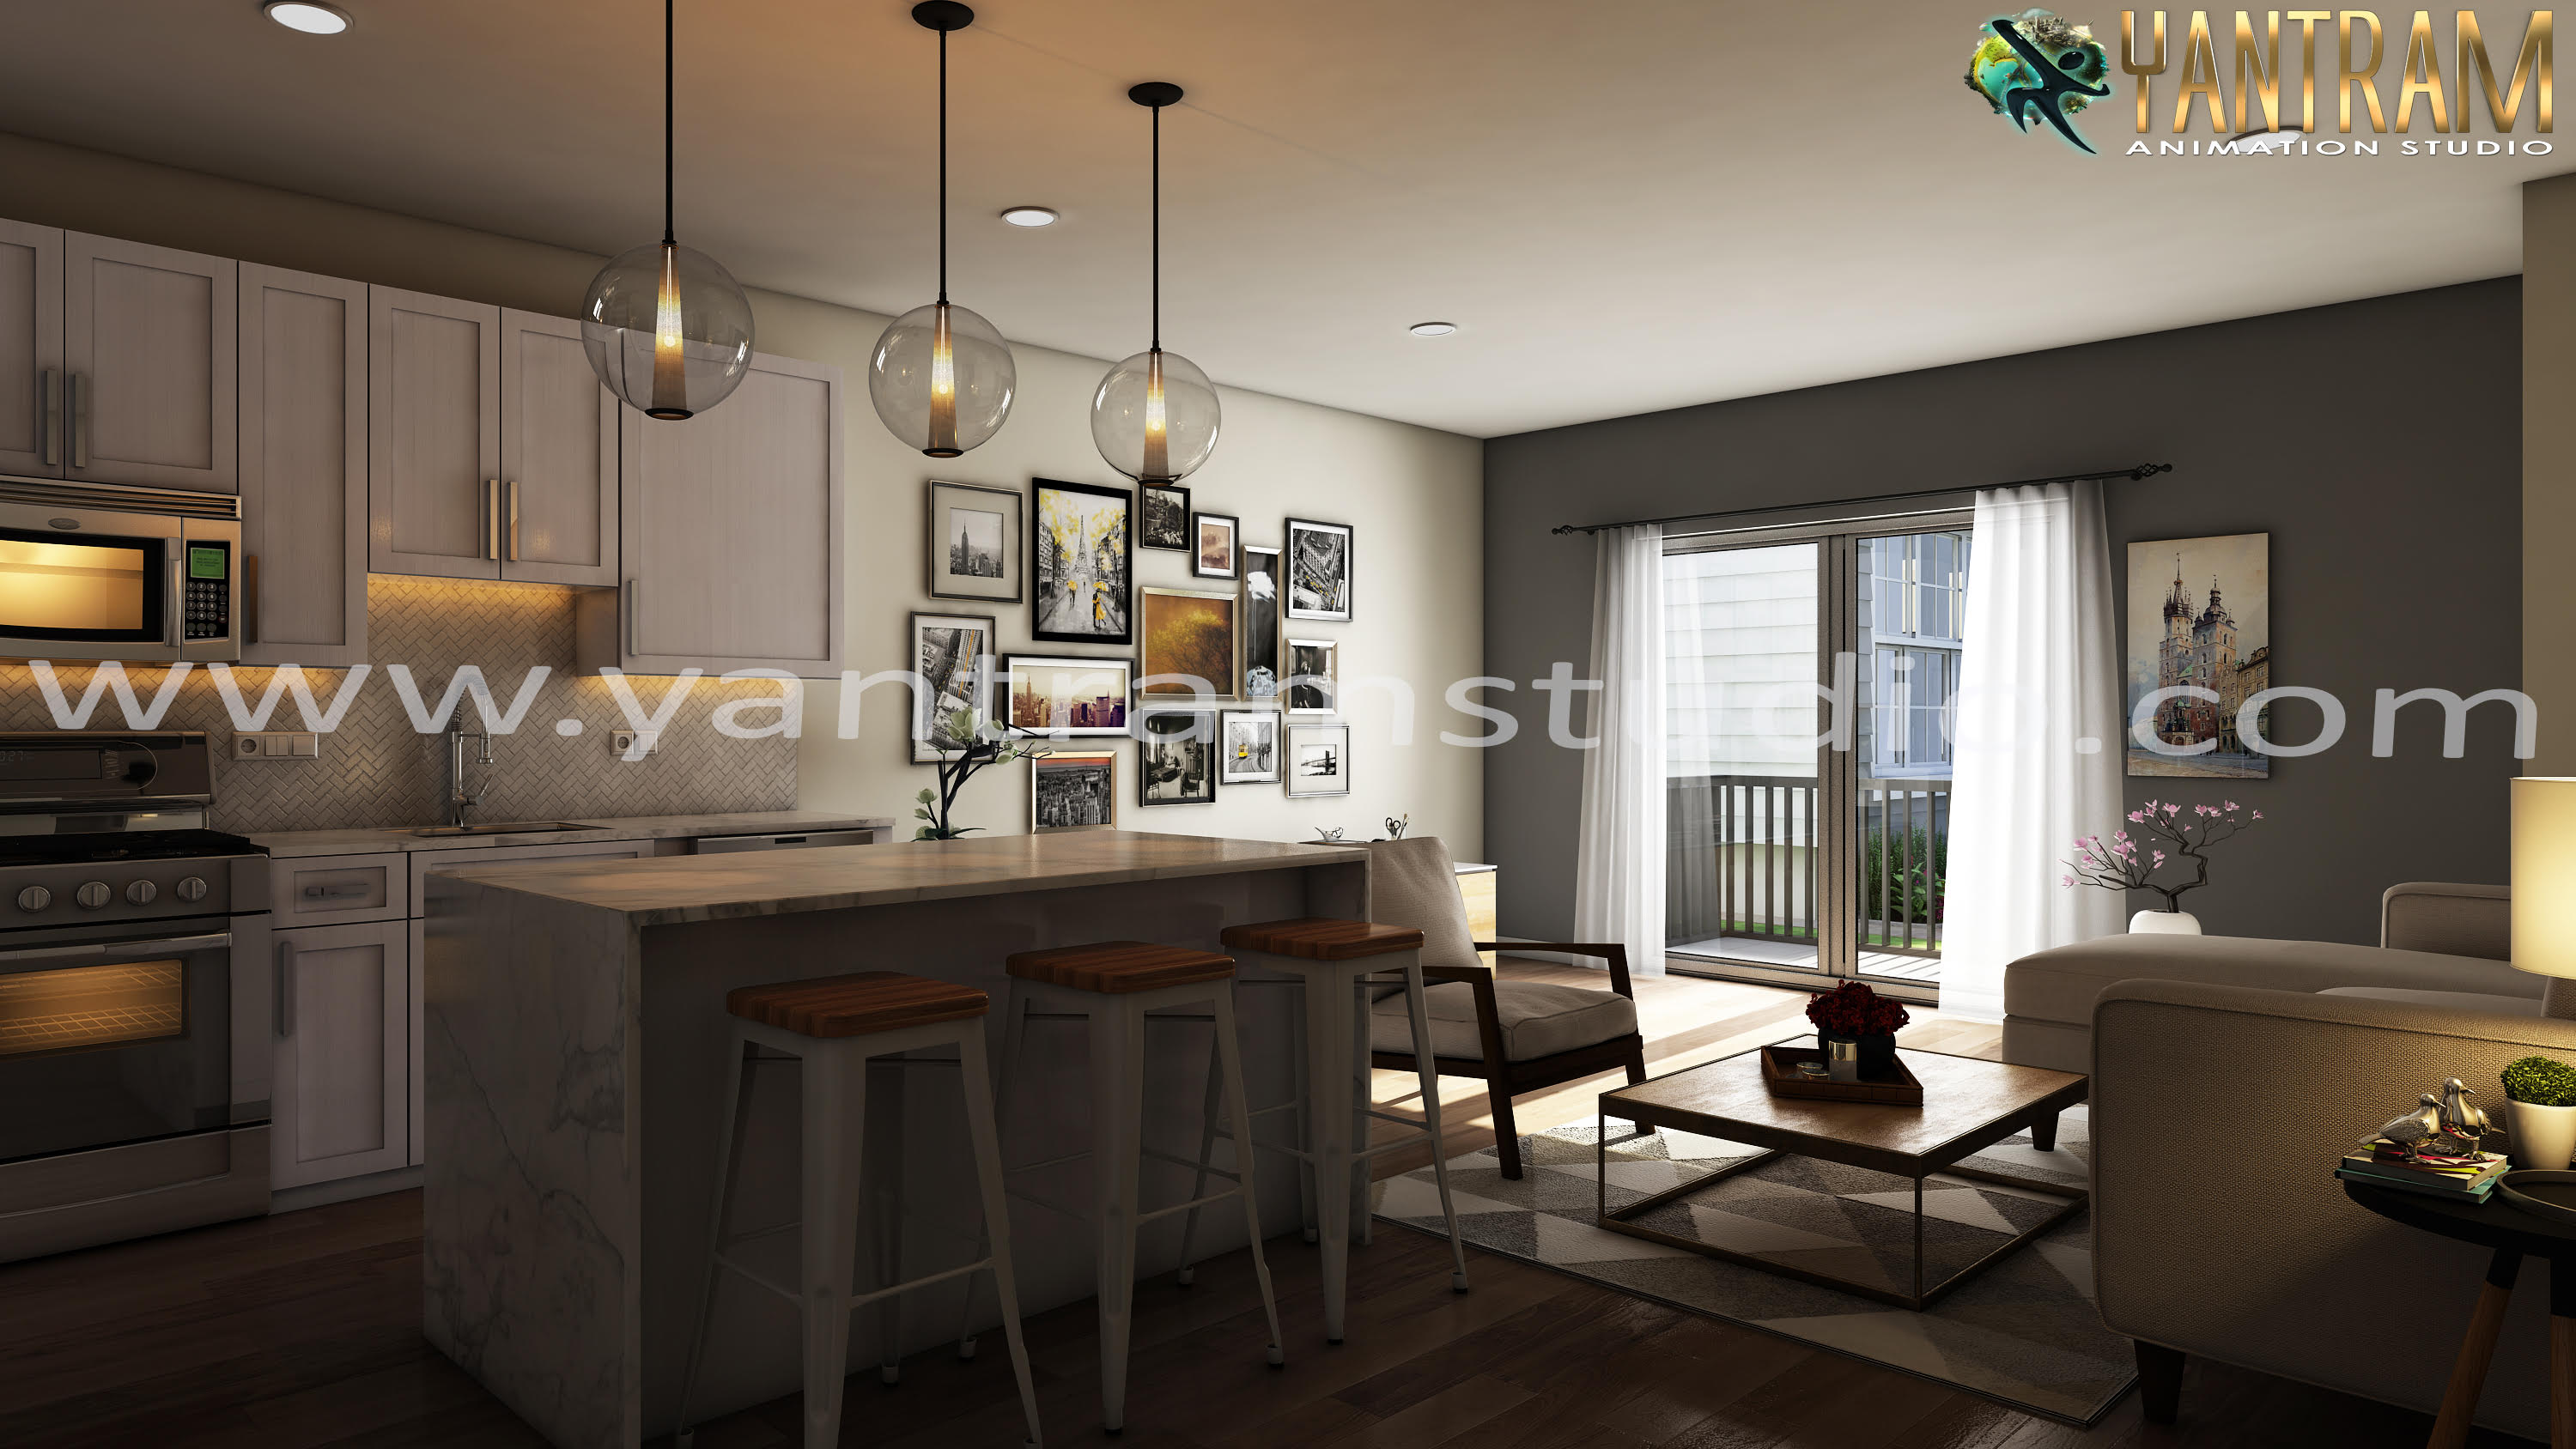 Living room concept of Interior Design Firms by architectural design studio.jpg -  by Yantramarchitecturaldesignstudio